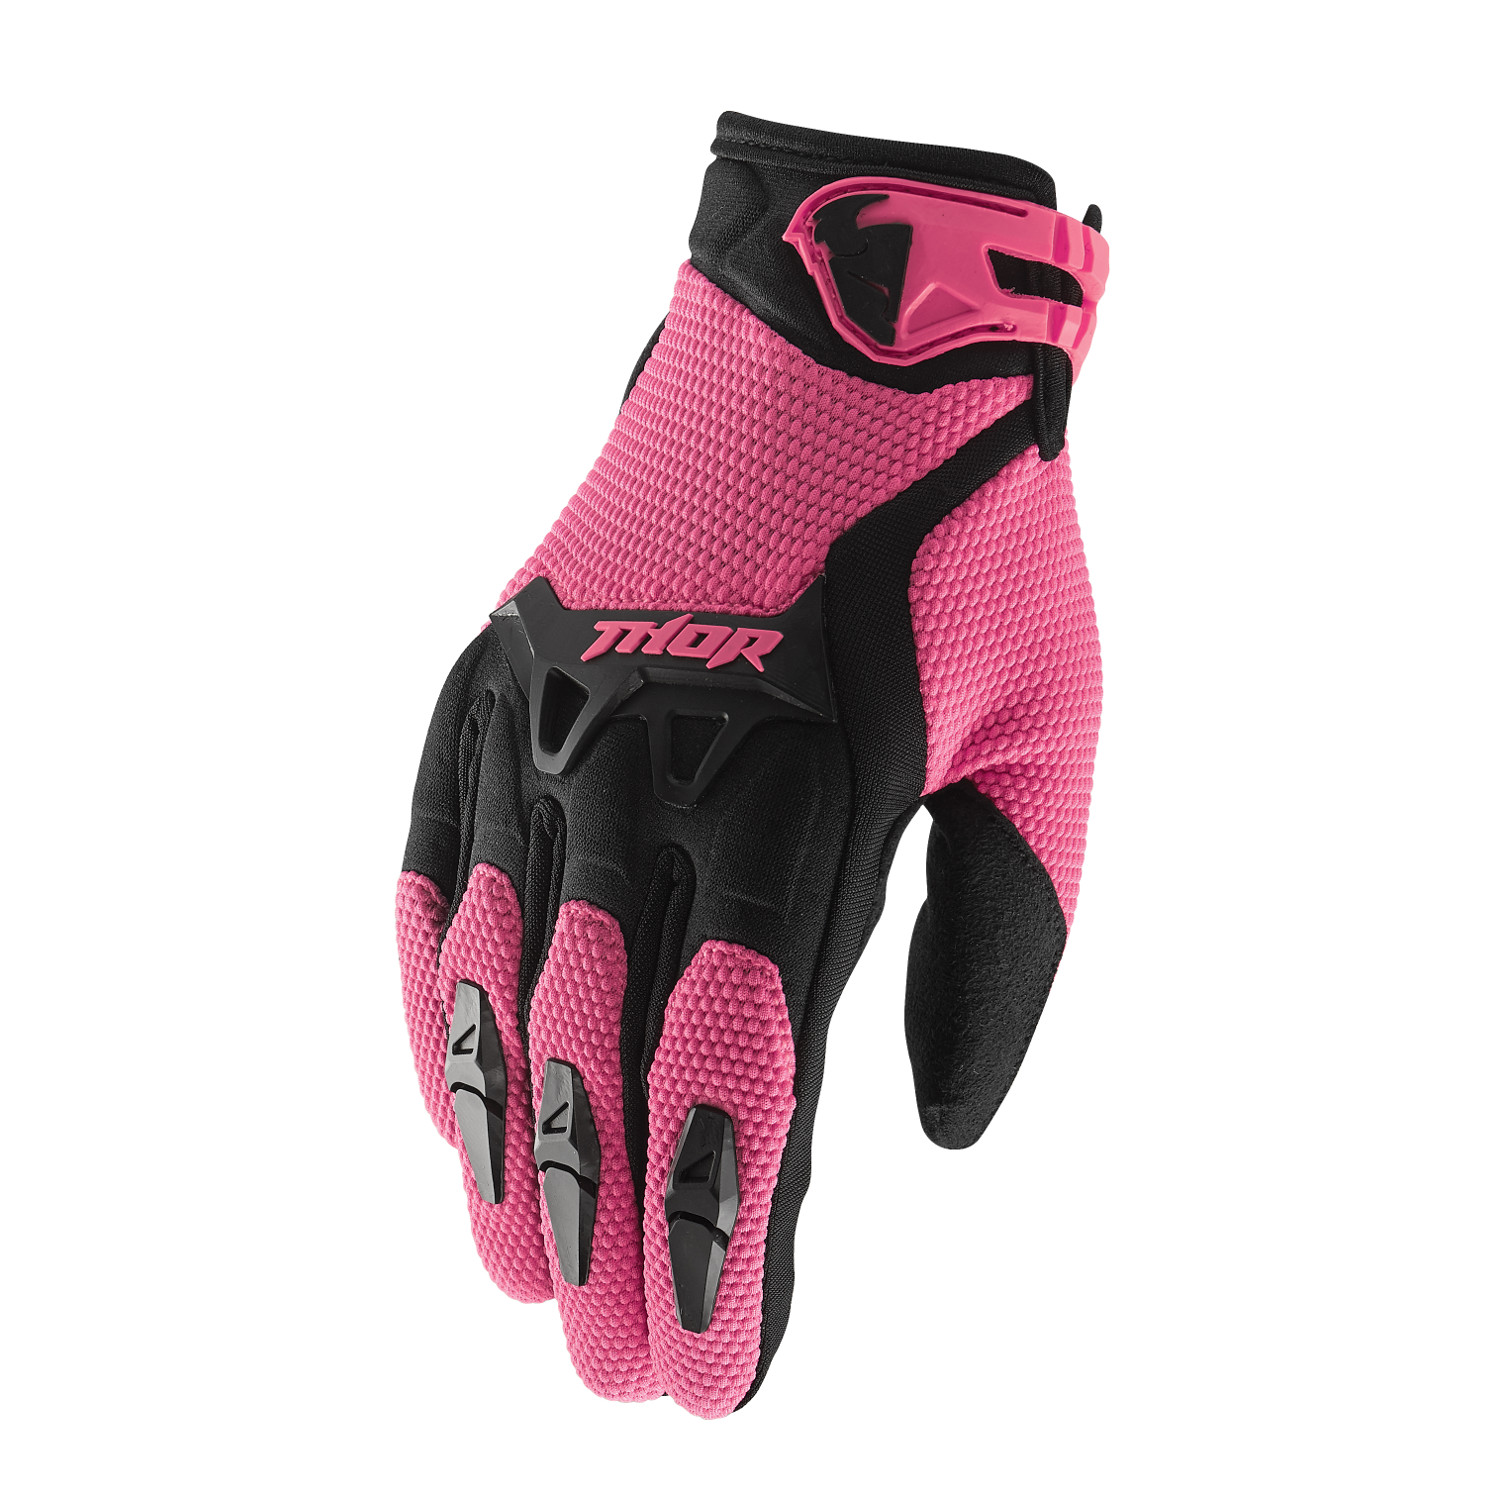 Thor Gloves Spectrum Pink/Black